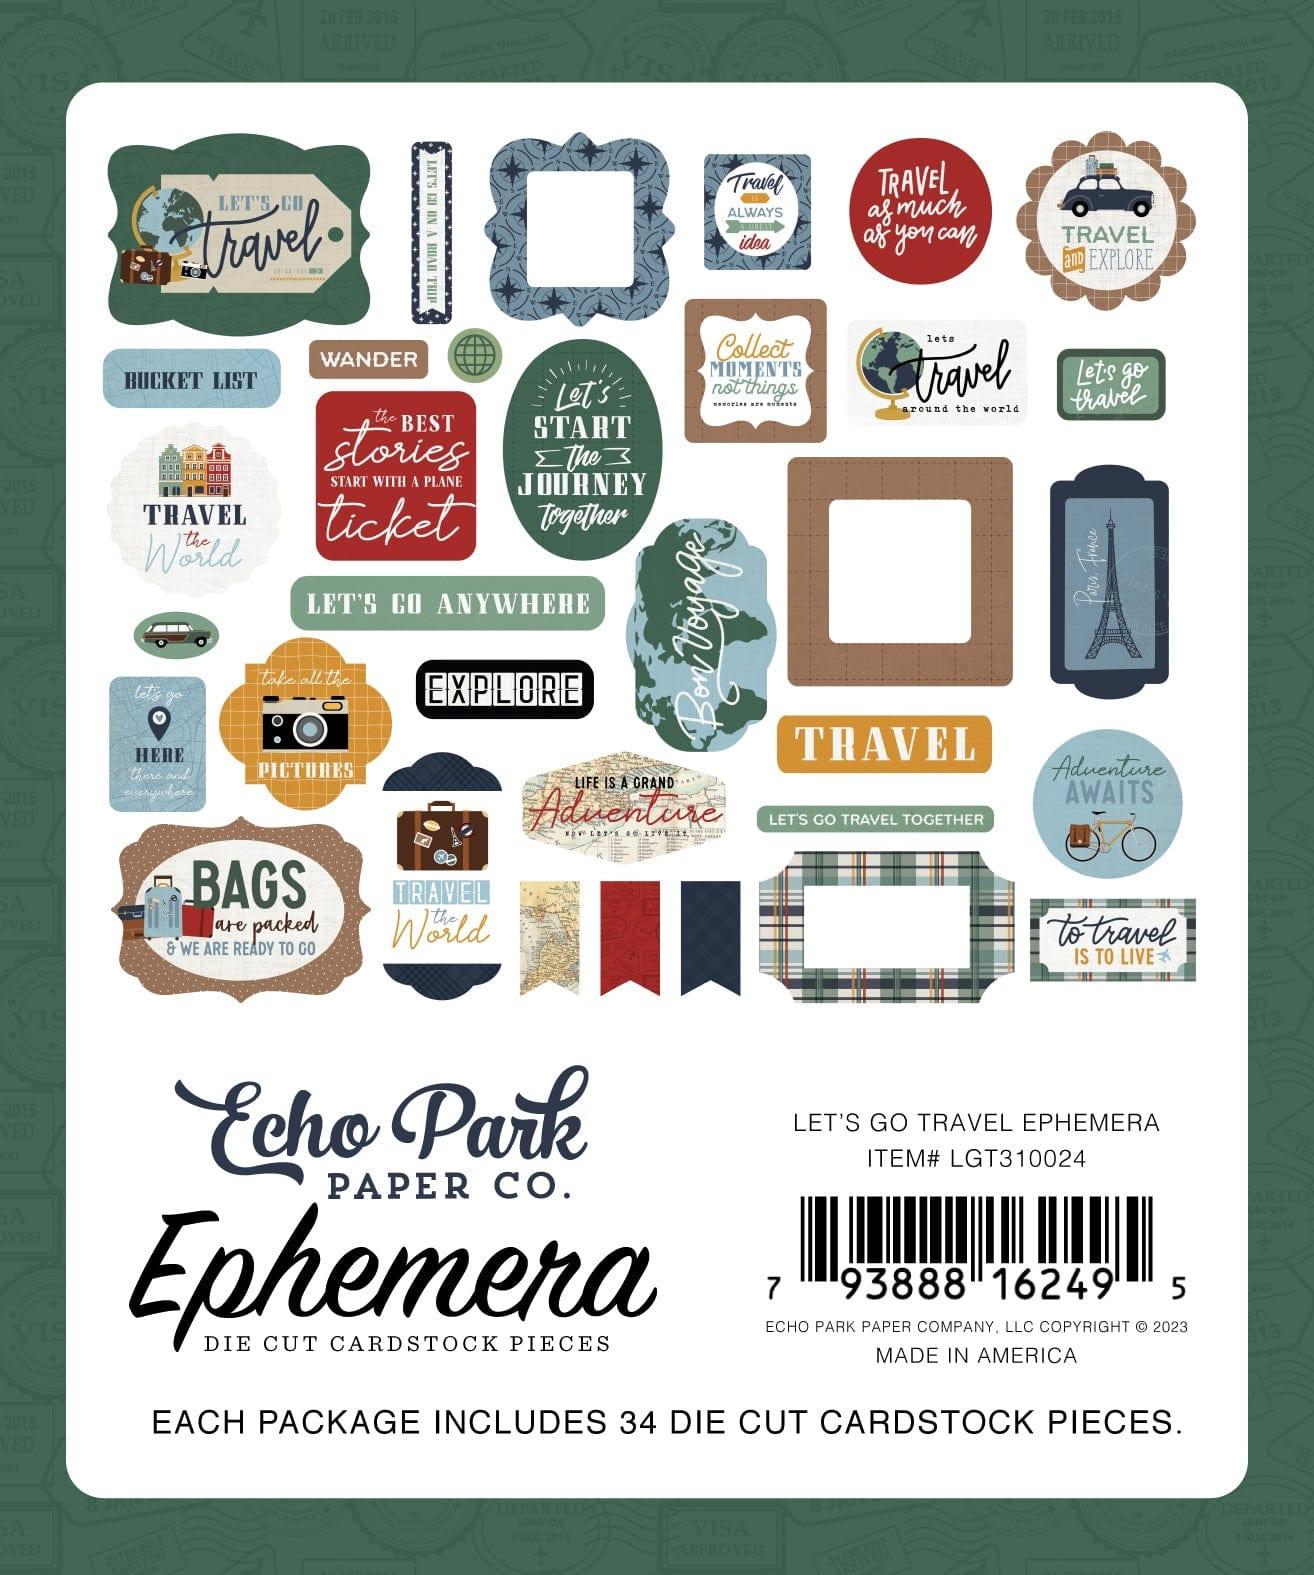 Echo Park Paper Co. Spring/Summer Catalog 2023 by echoparkpaper